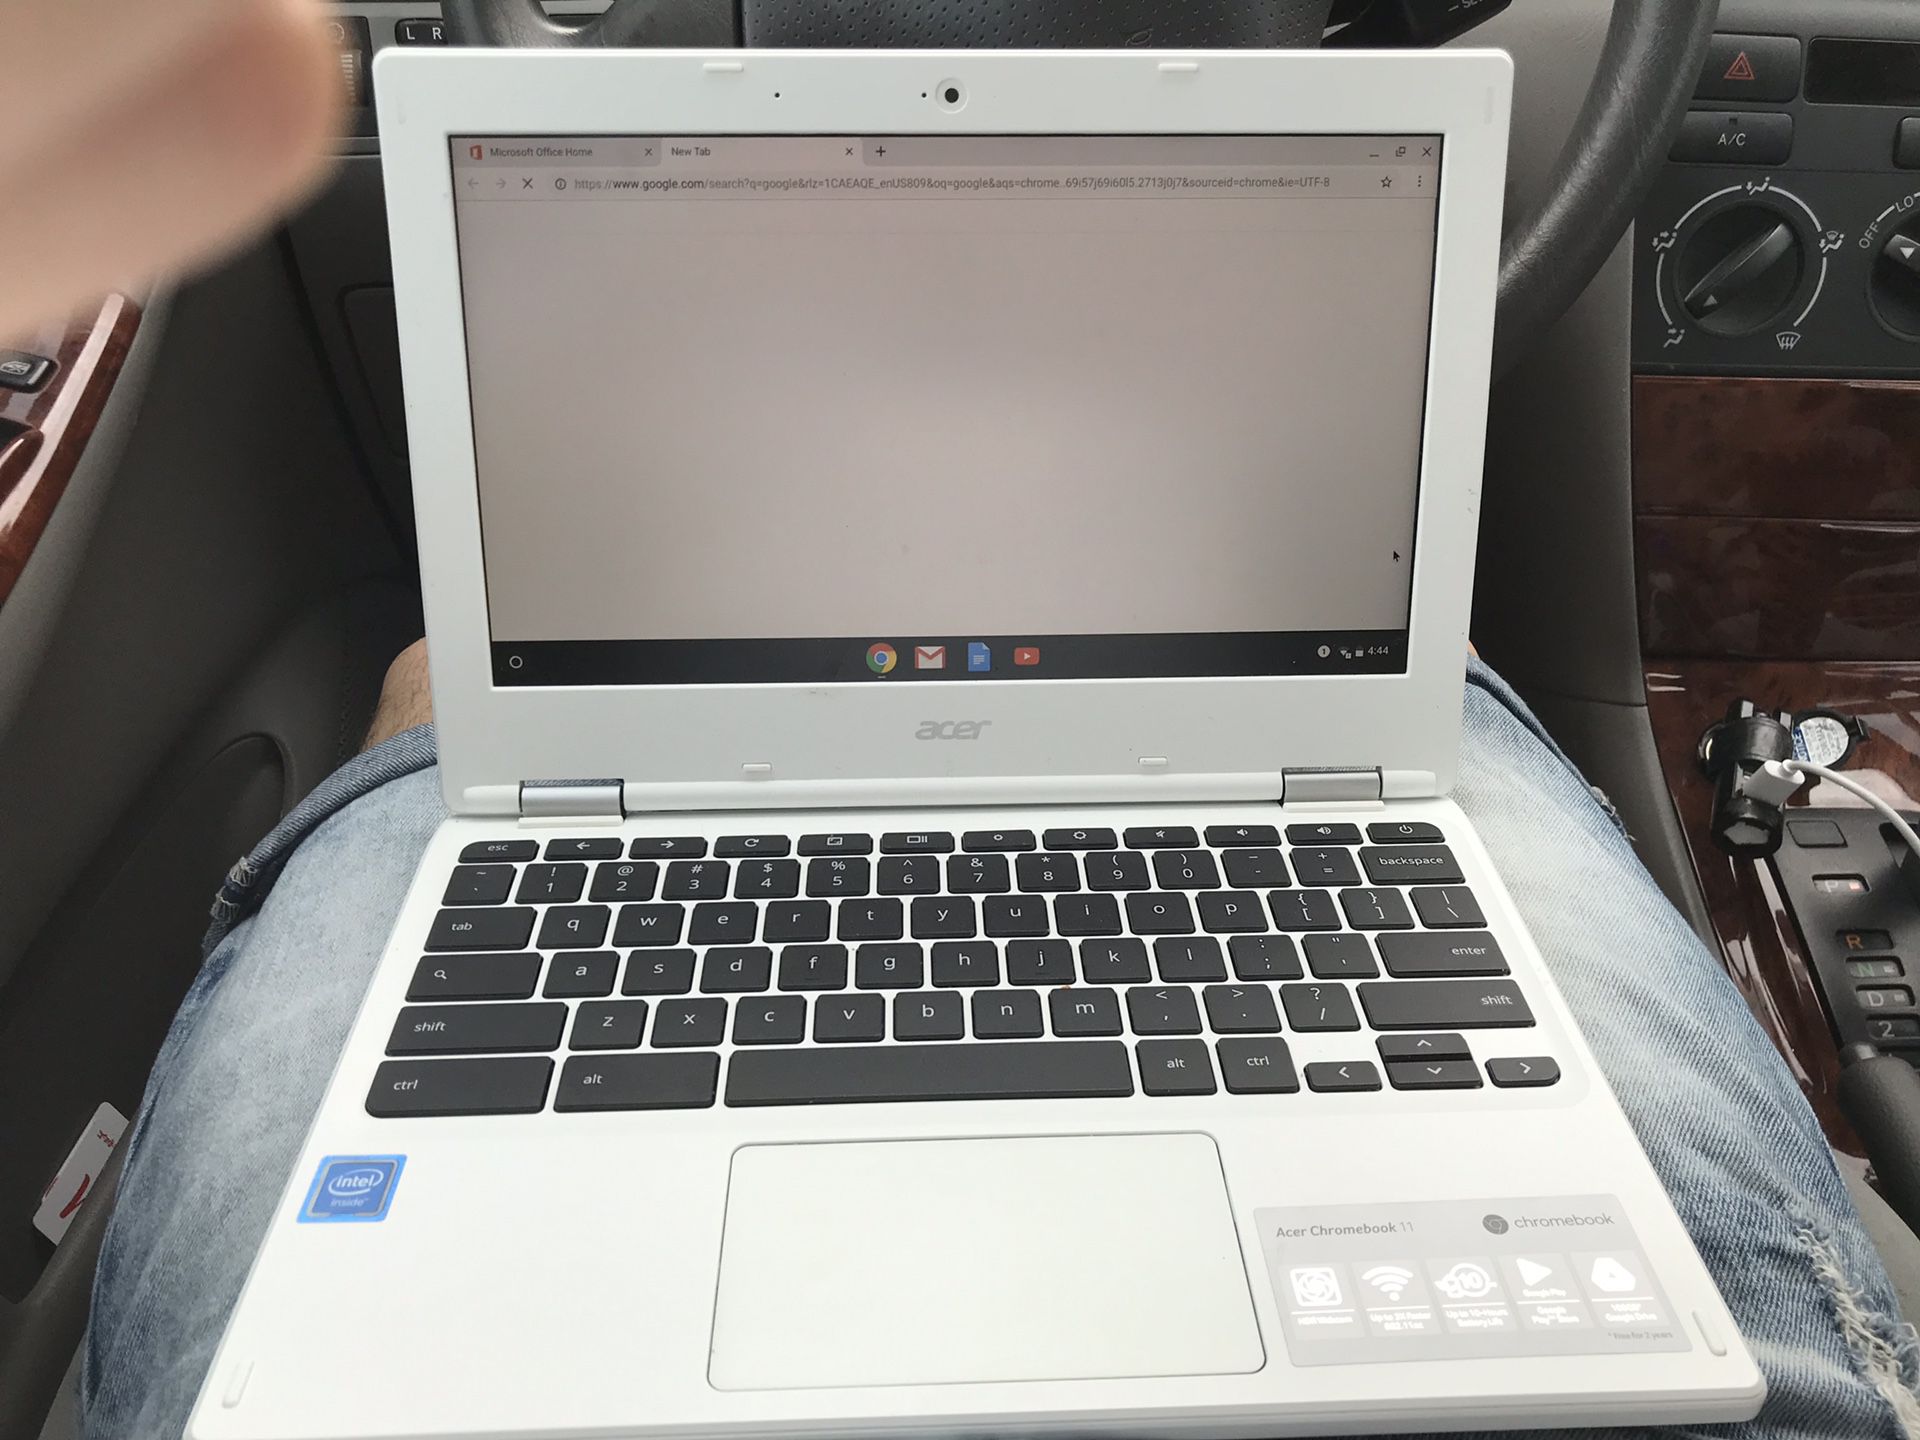 Acer Chromebook With Intel Celeron N3060 Processor, Chrome OS